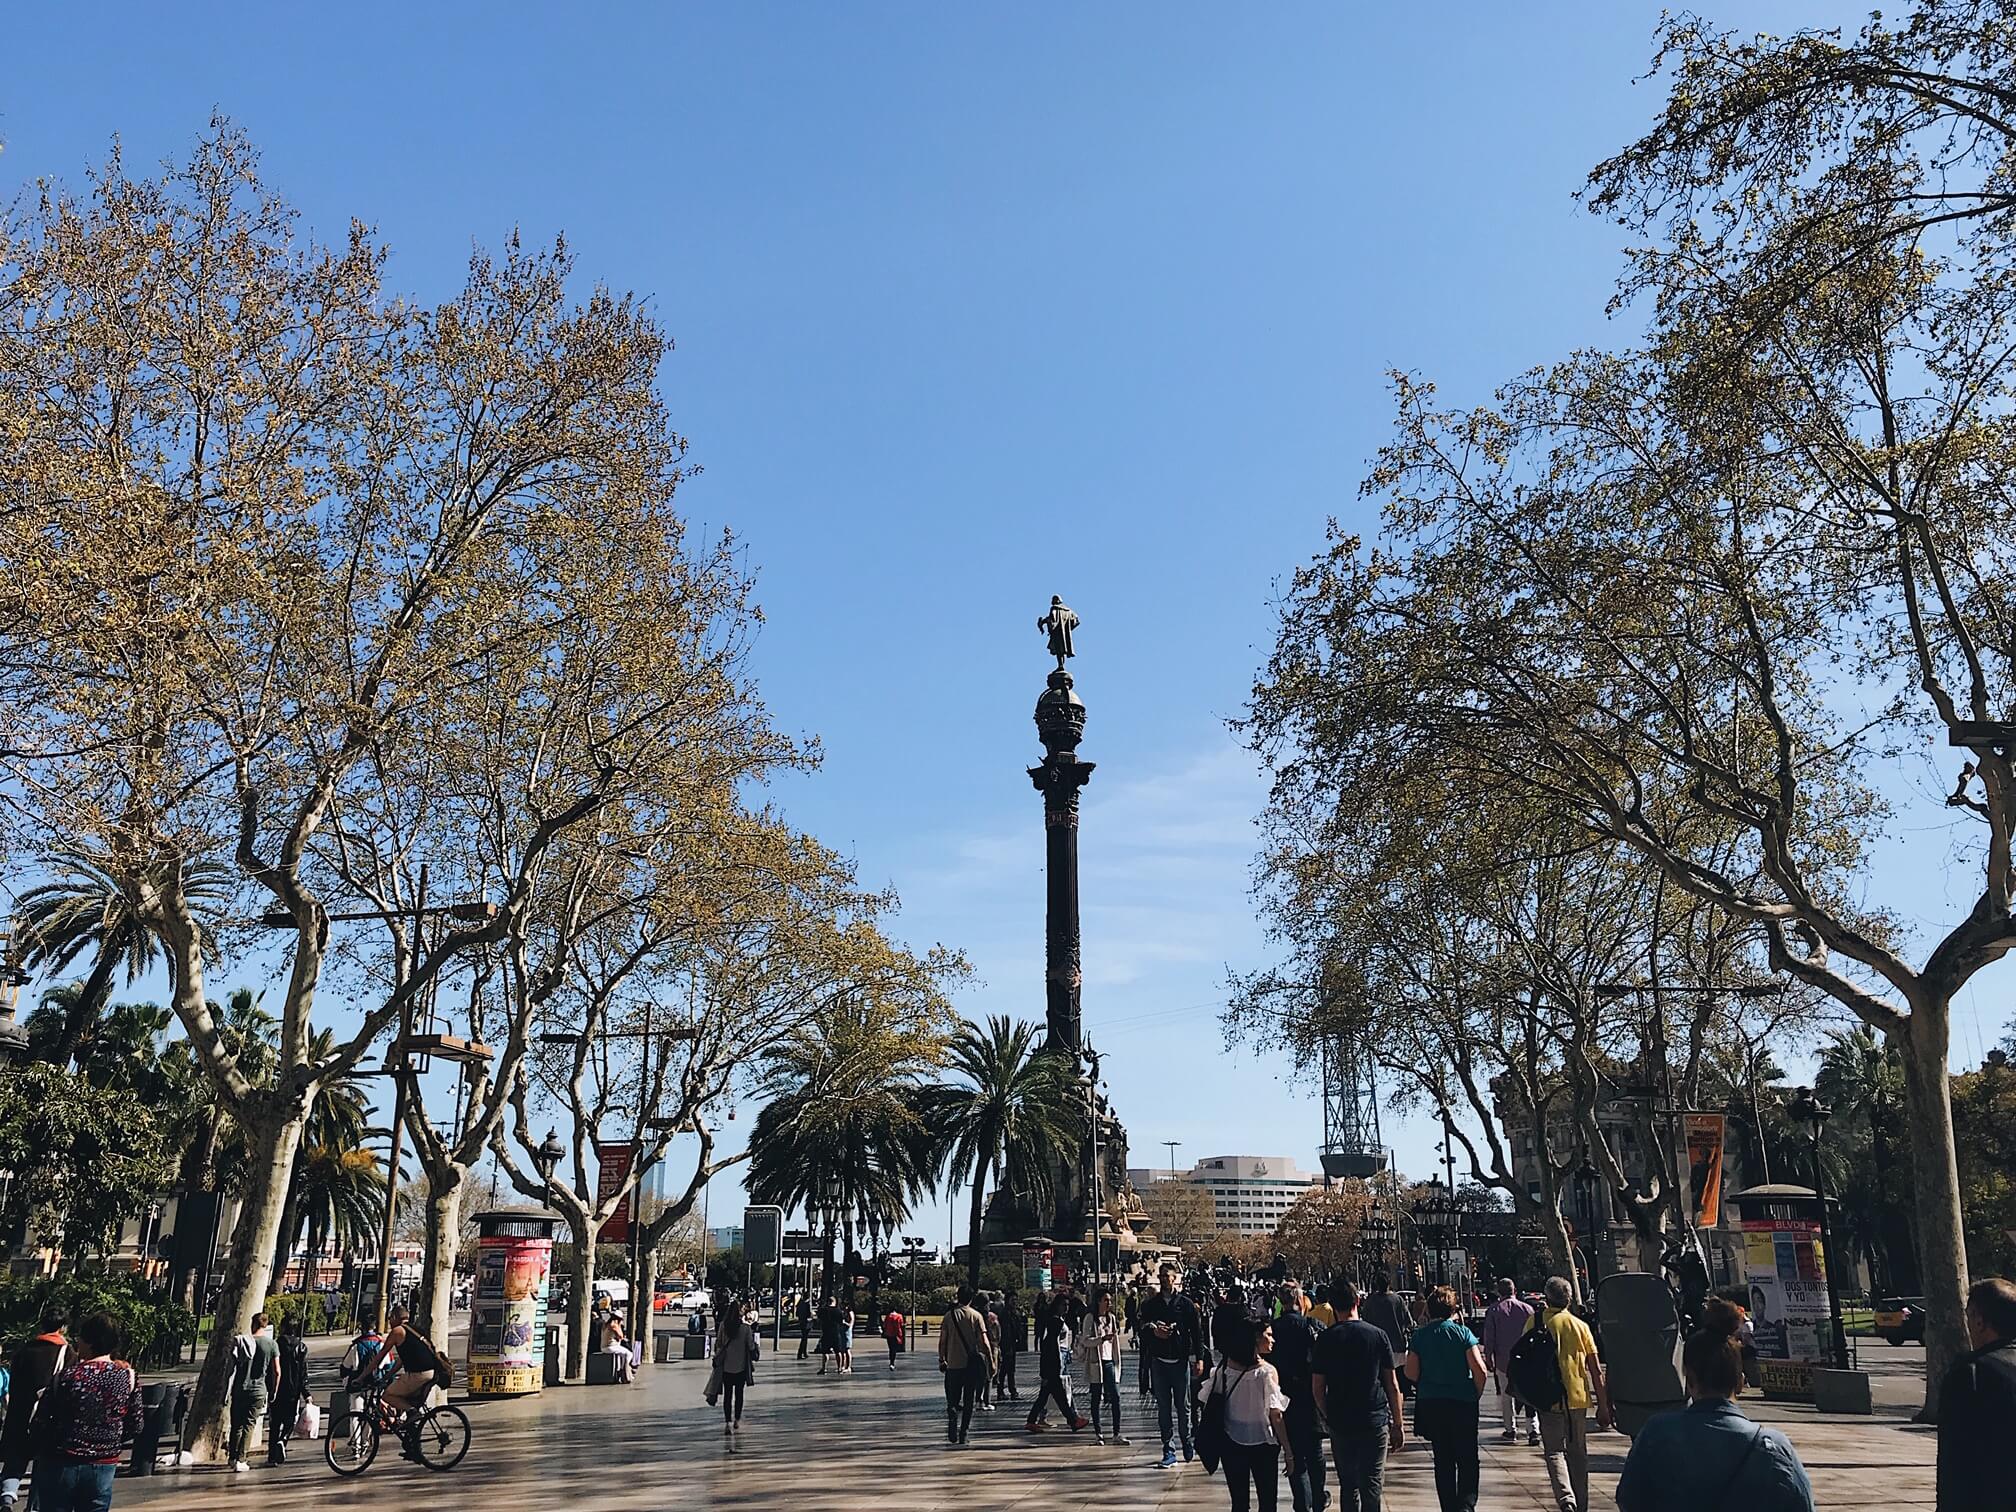 Barcelona Weekend: Columbus Monument